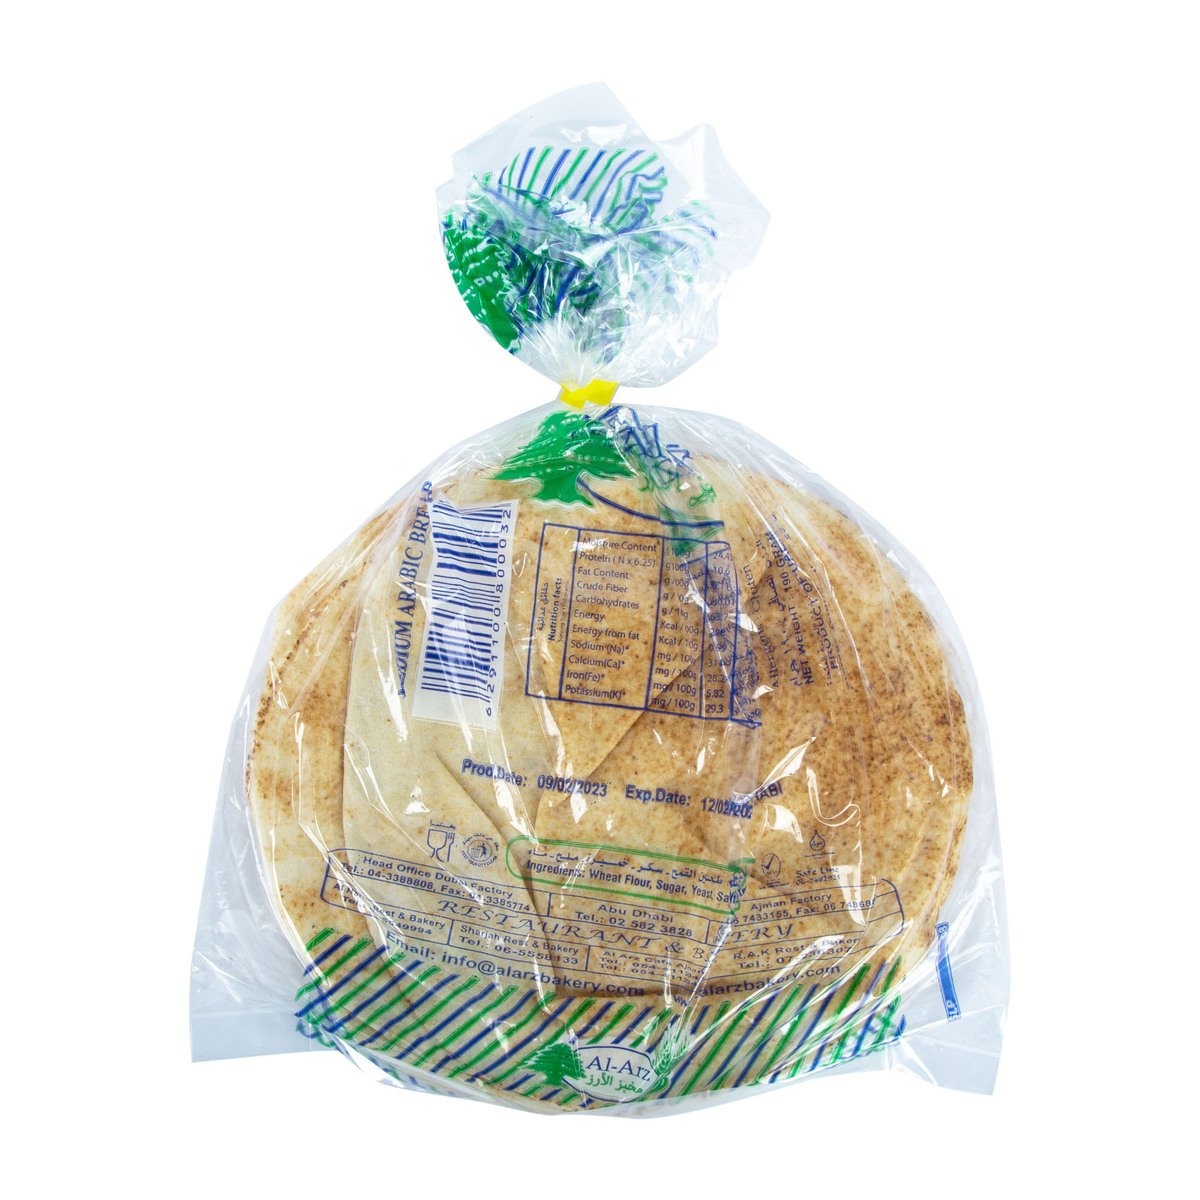 Al Arz Arabic Bread Medium 5 pcs